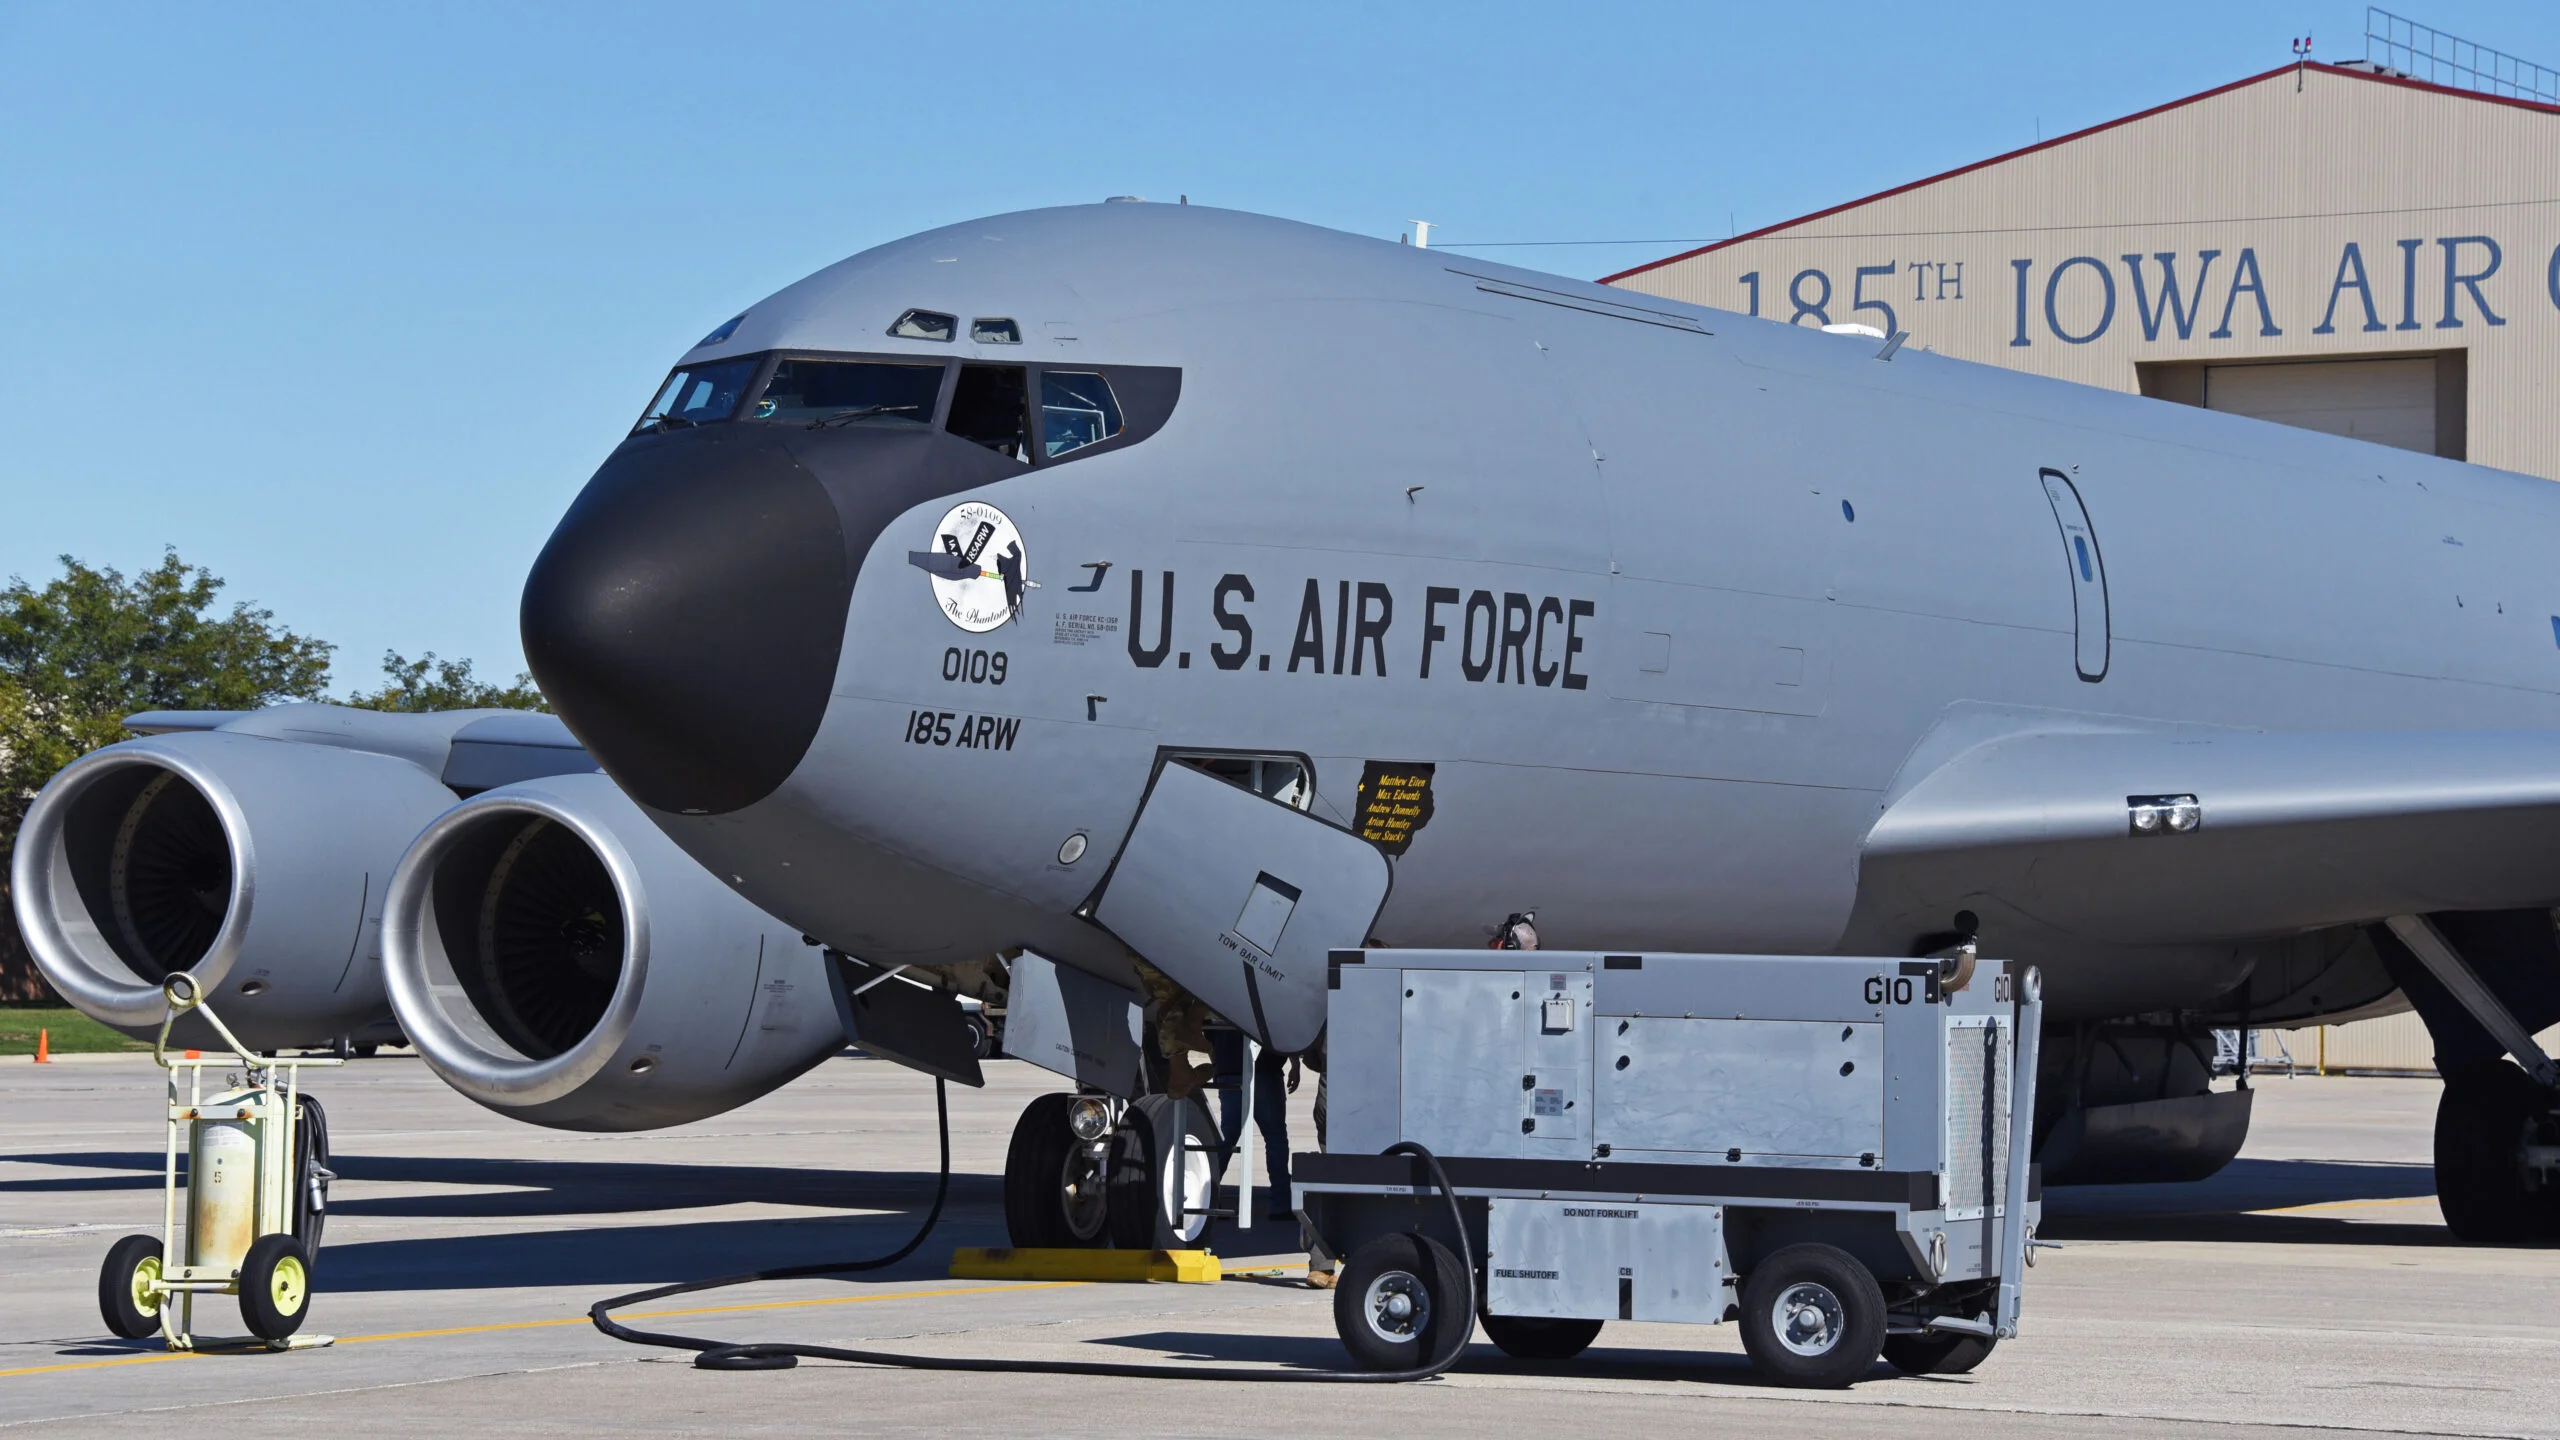 Misterio aéreo: “El Fantasma” del KC-135R revelado